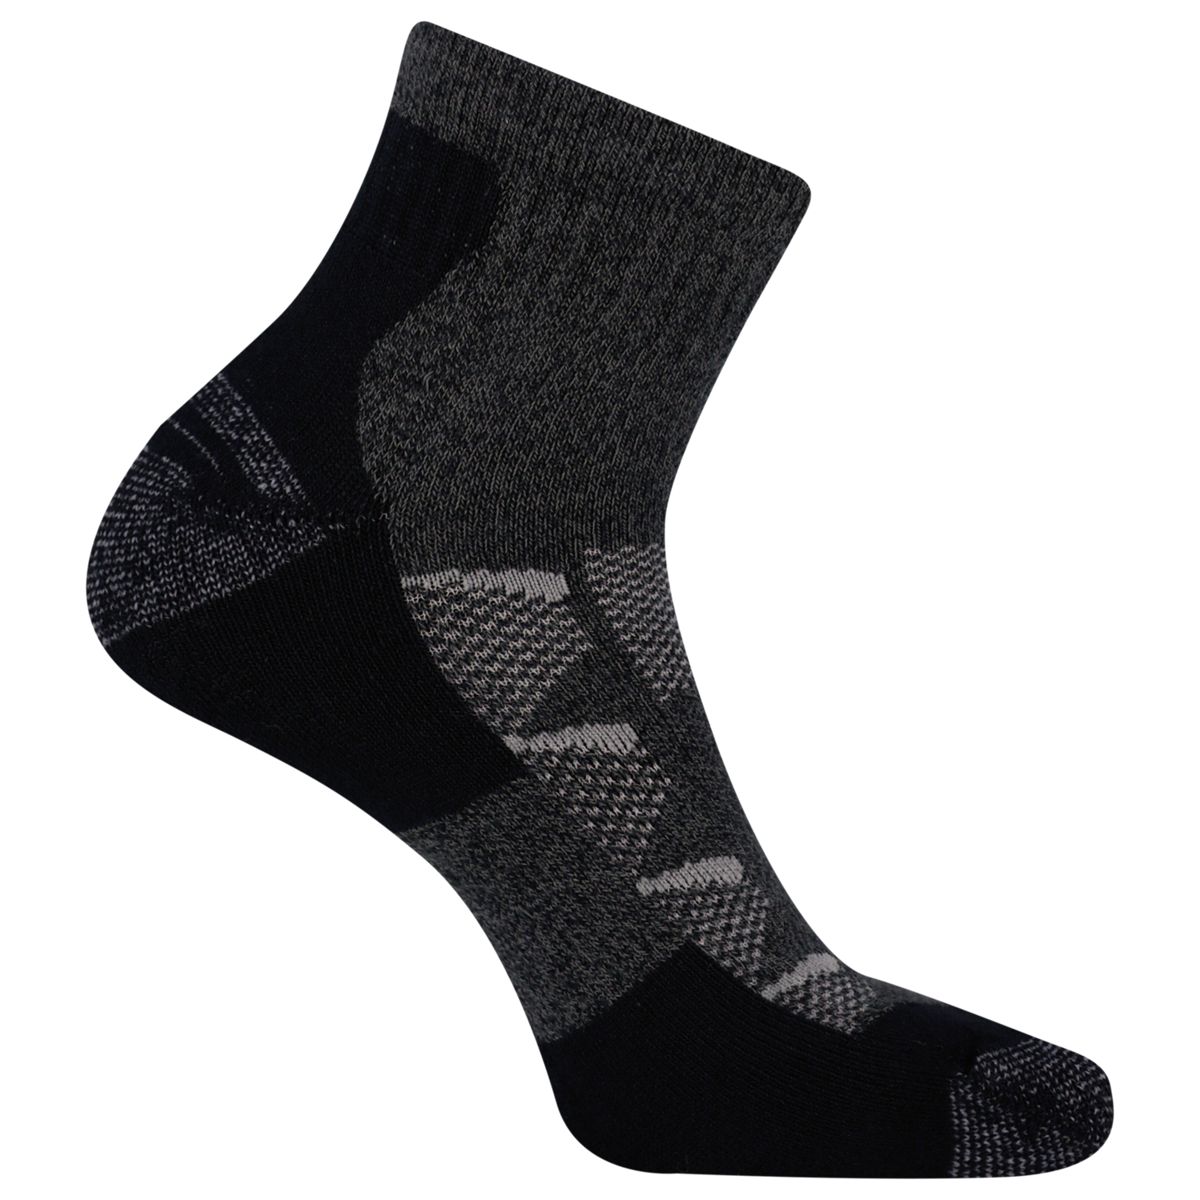 Merrell Adult's Cozy Gripper Low Cut Slipper Socks-Unisex Soft Brushed  Inner Layer and Full Cushion, Navy, S/M (Men's 5-8.5 / Women's 5-9.5) at   Women's Clothing store